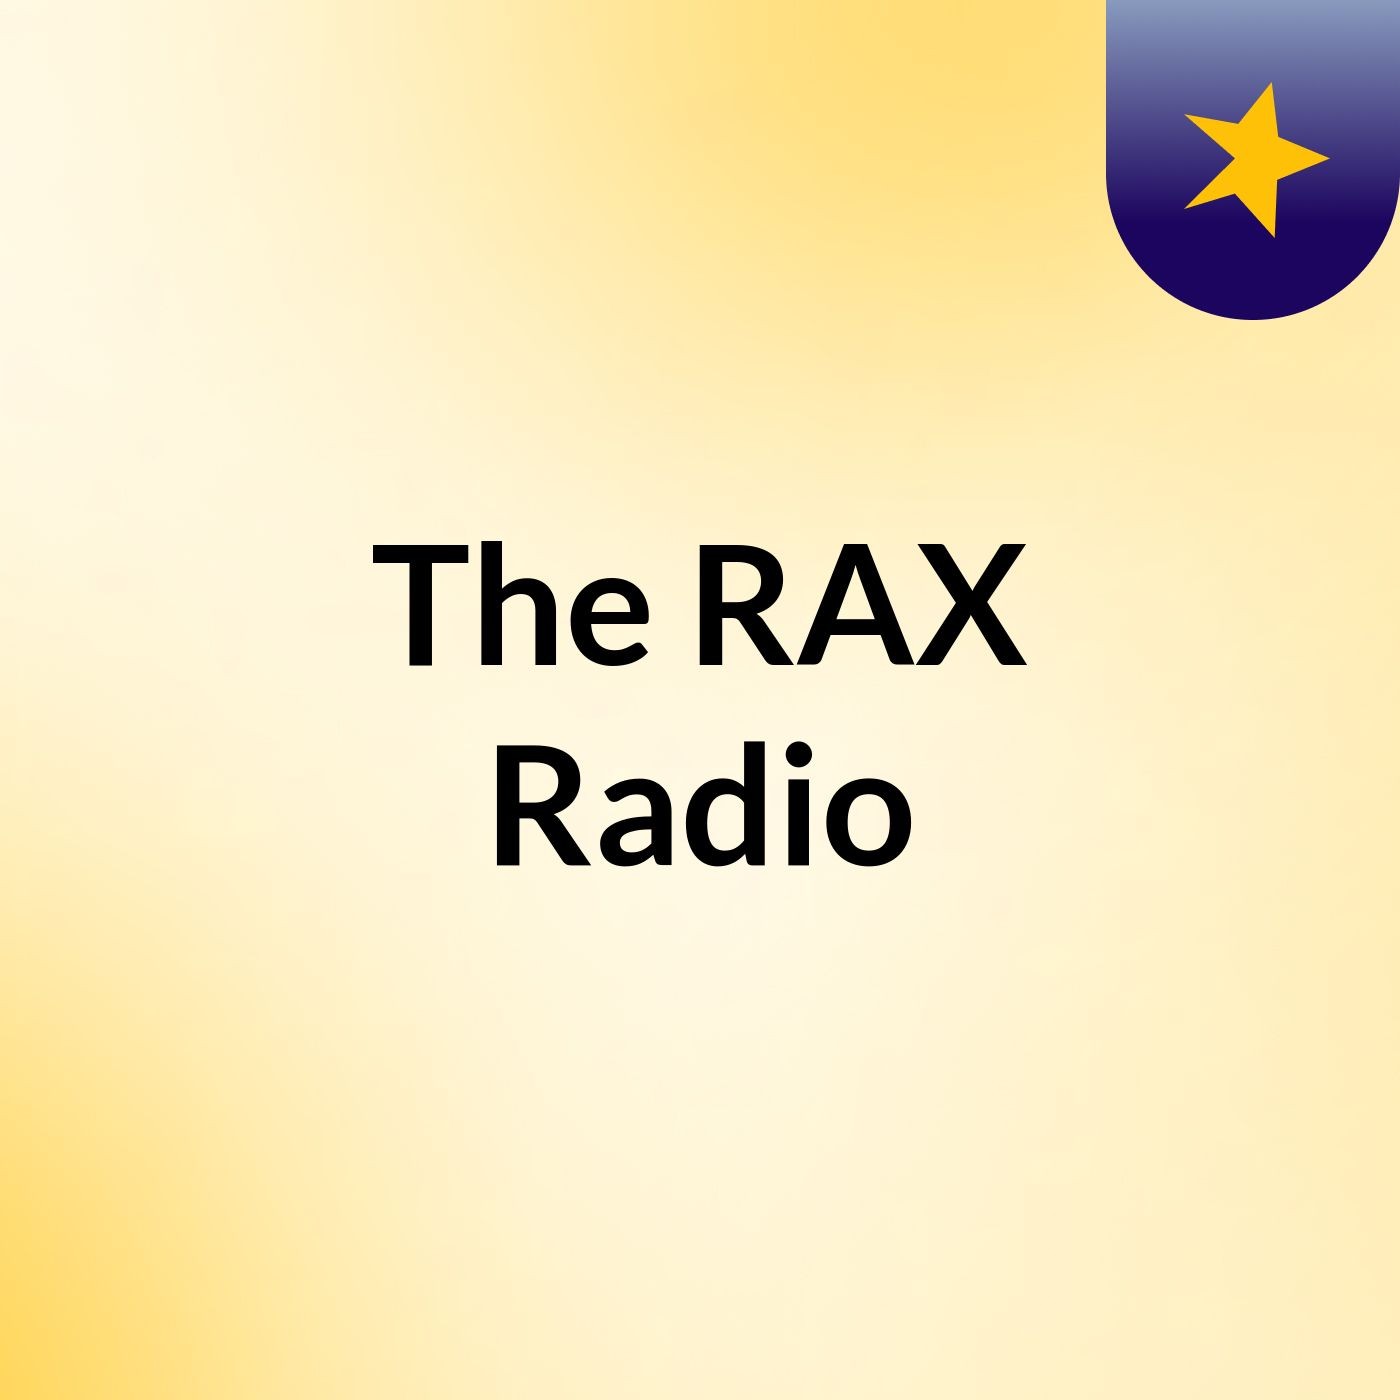 The RAX Radio